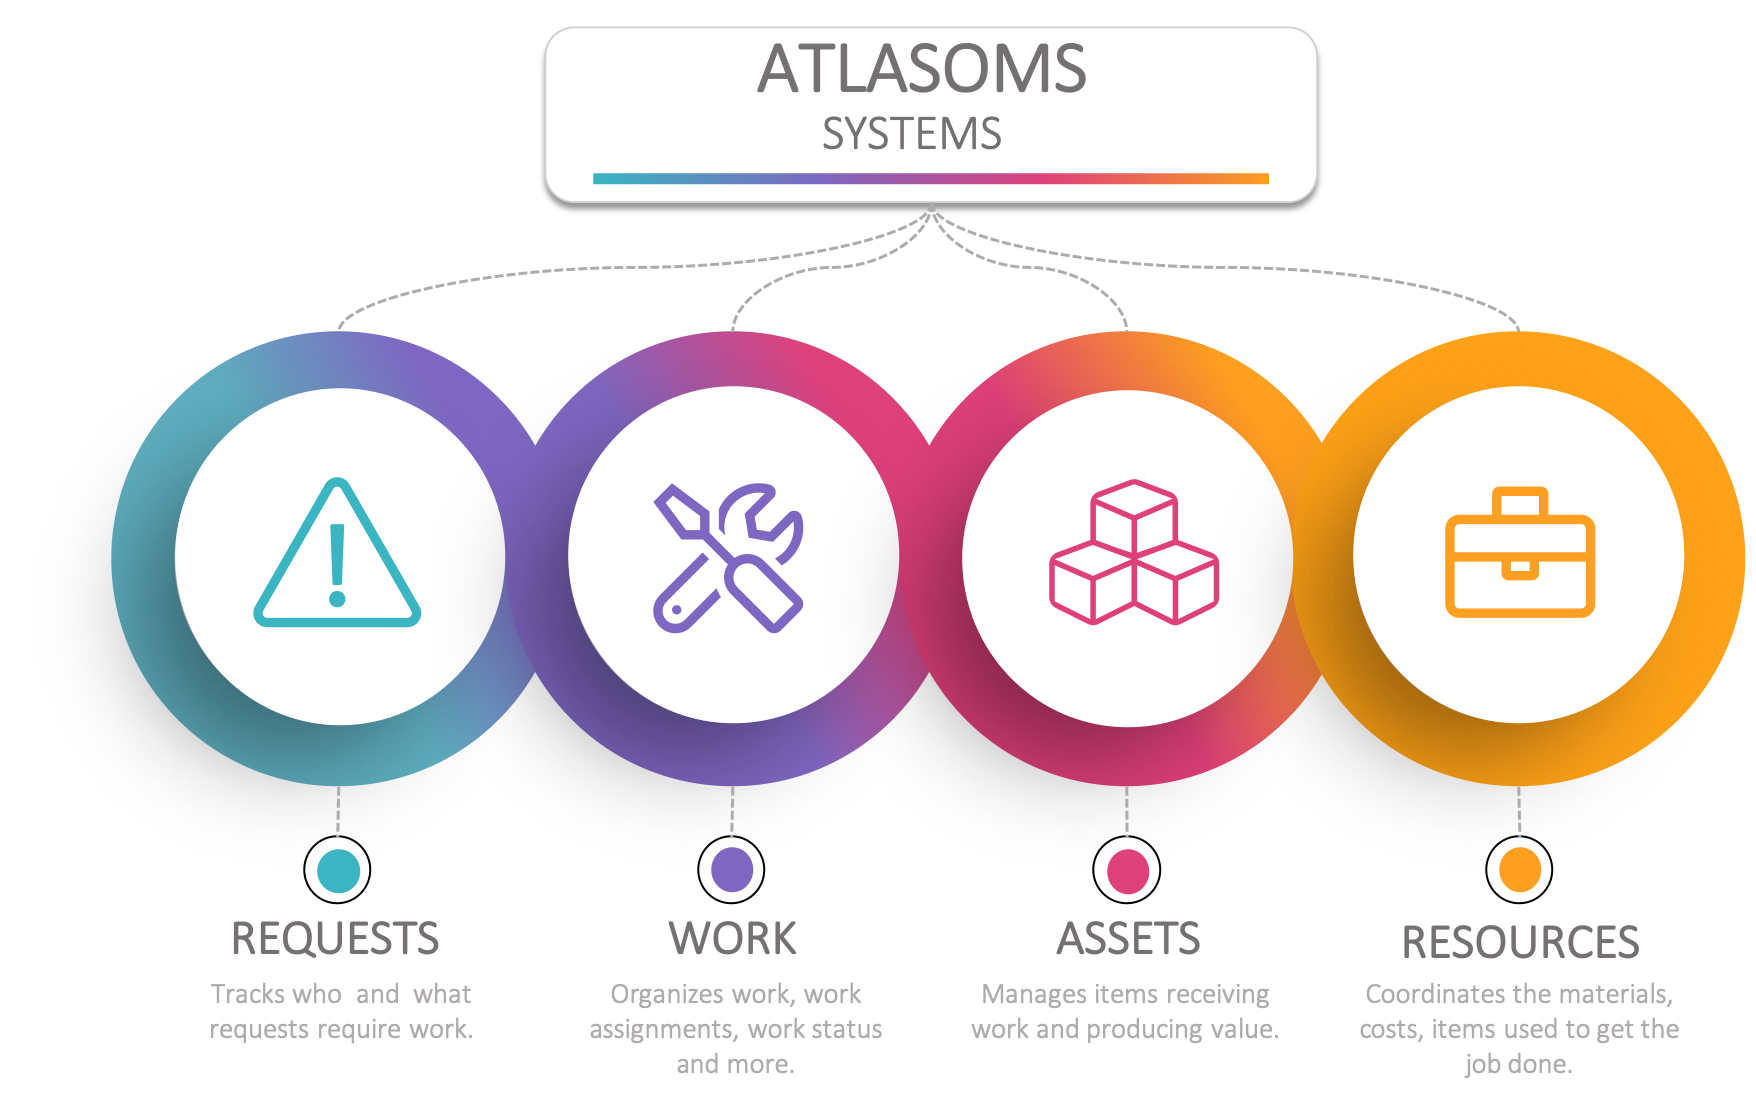 AtlasOMS Systems